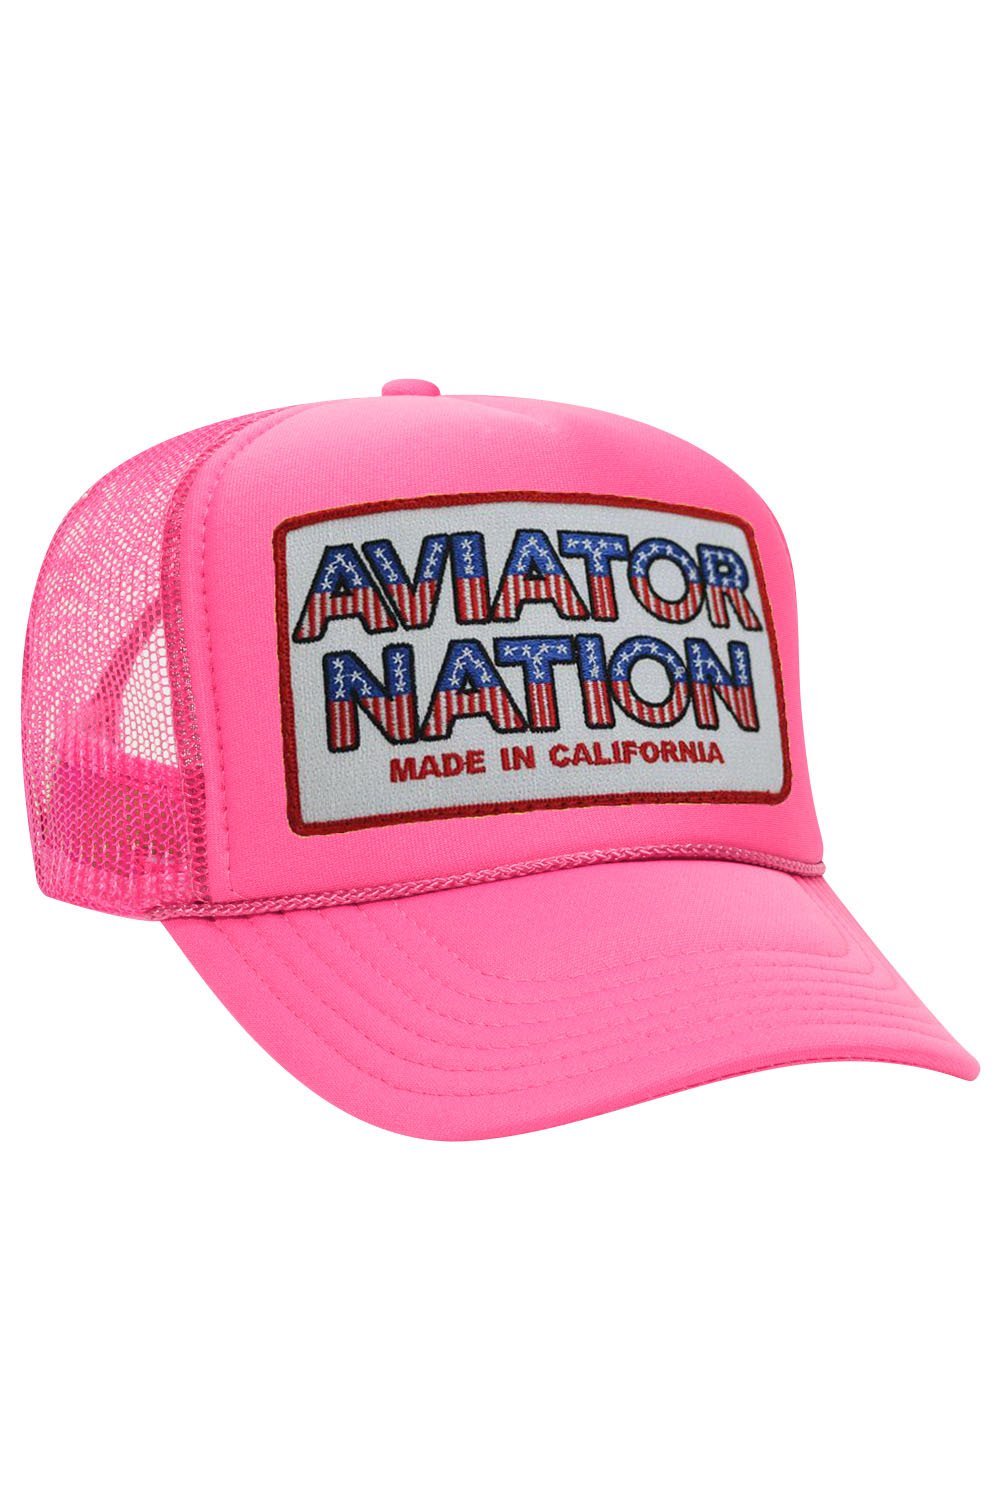 AVIATOR NATION USA PATRIOTIC VINTAGE TRUCKER HAT HATS Aviator Nation OS NEON PINK 